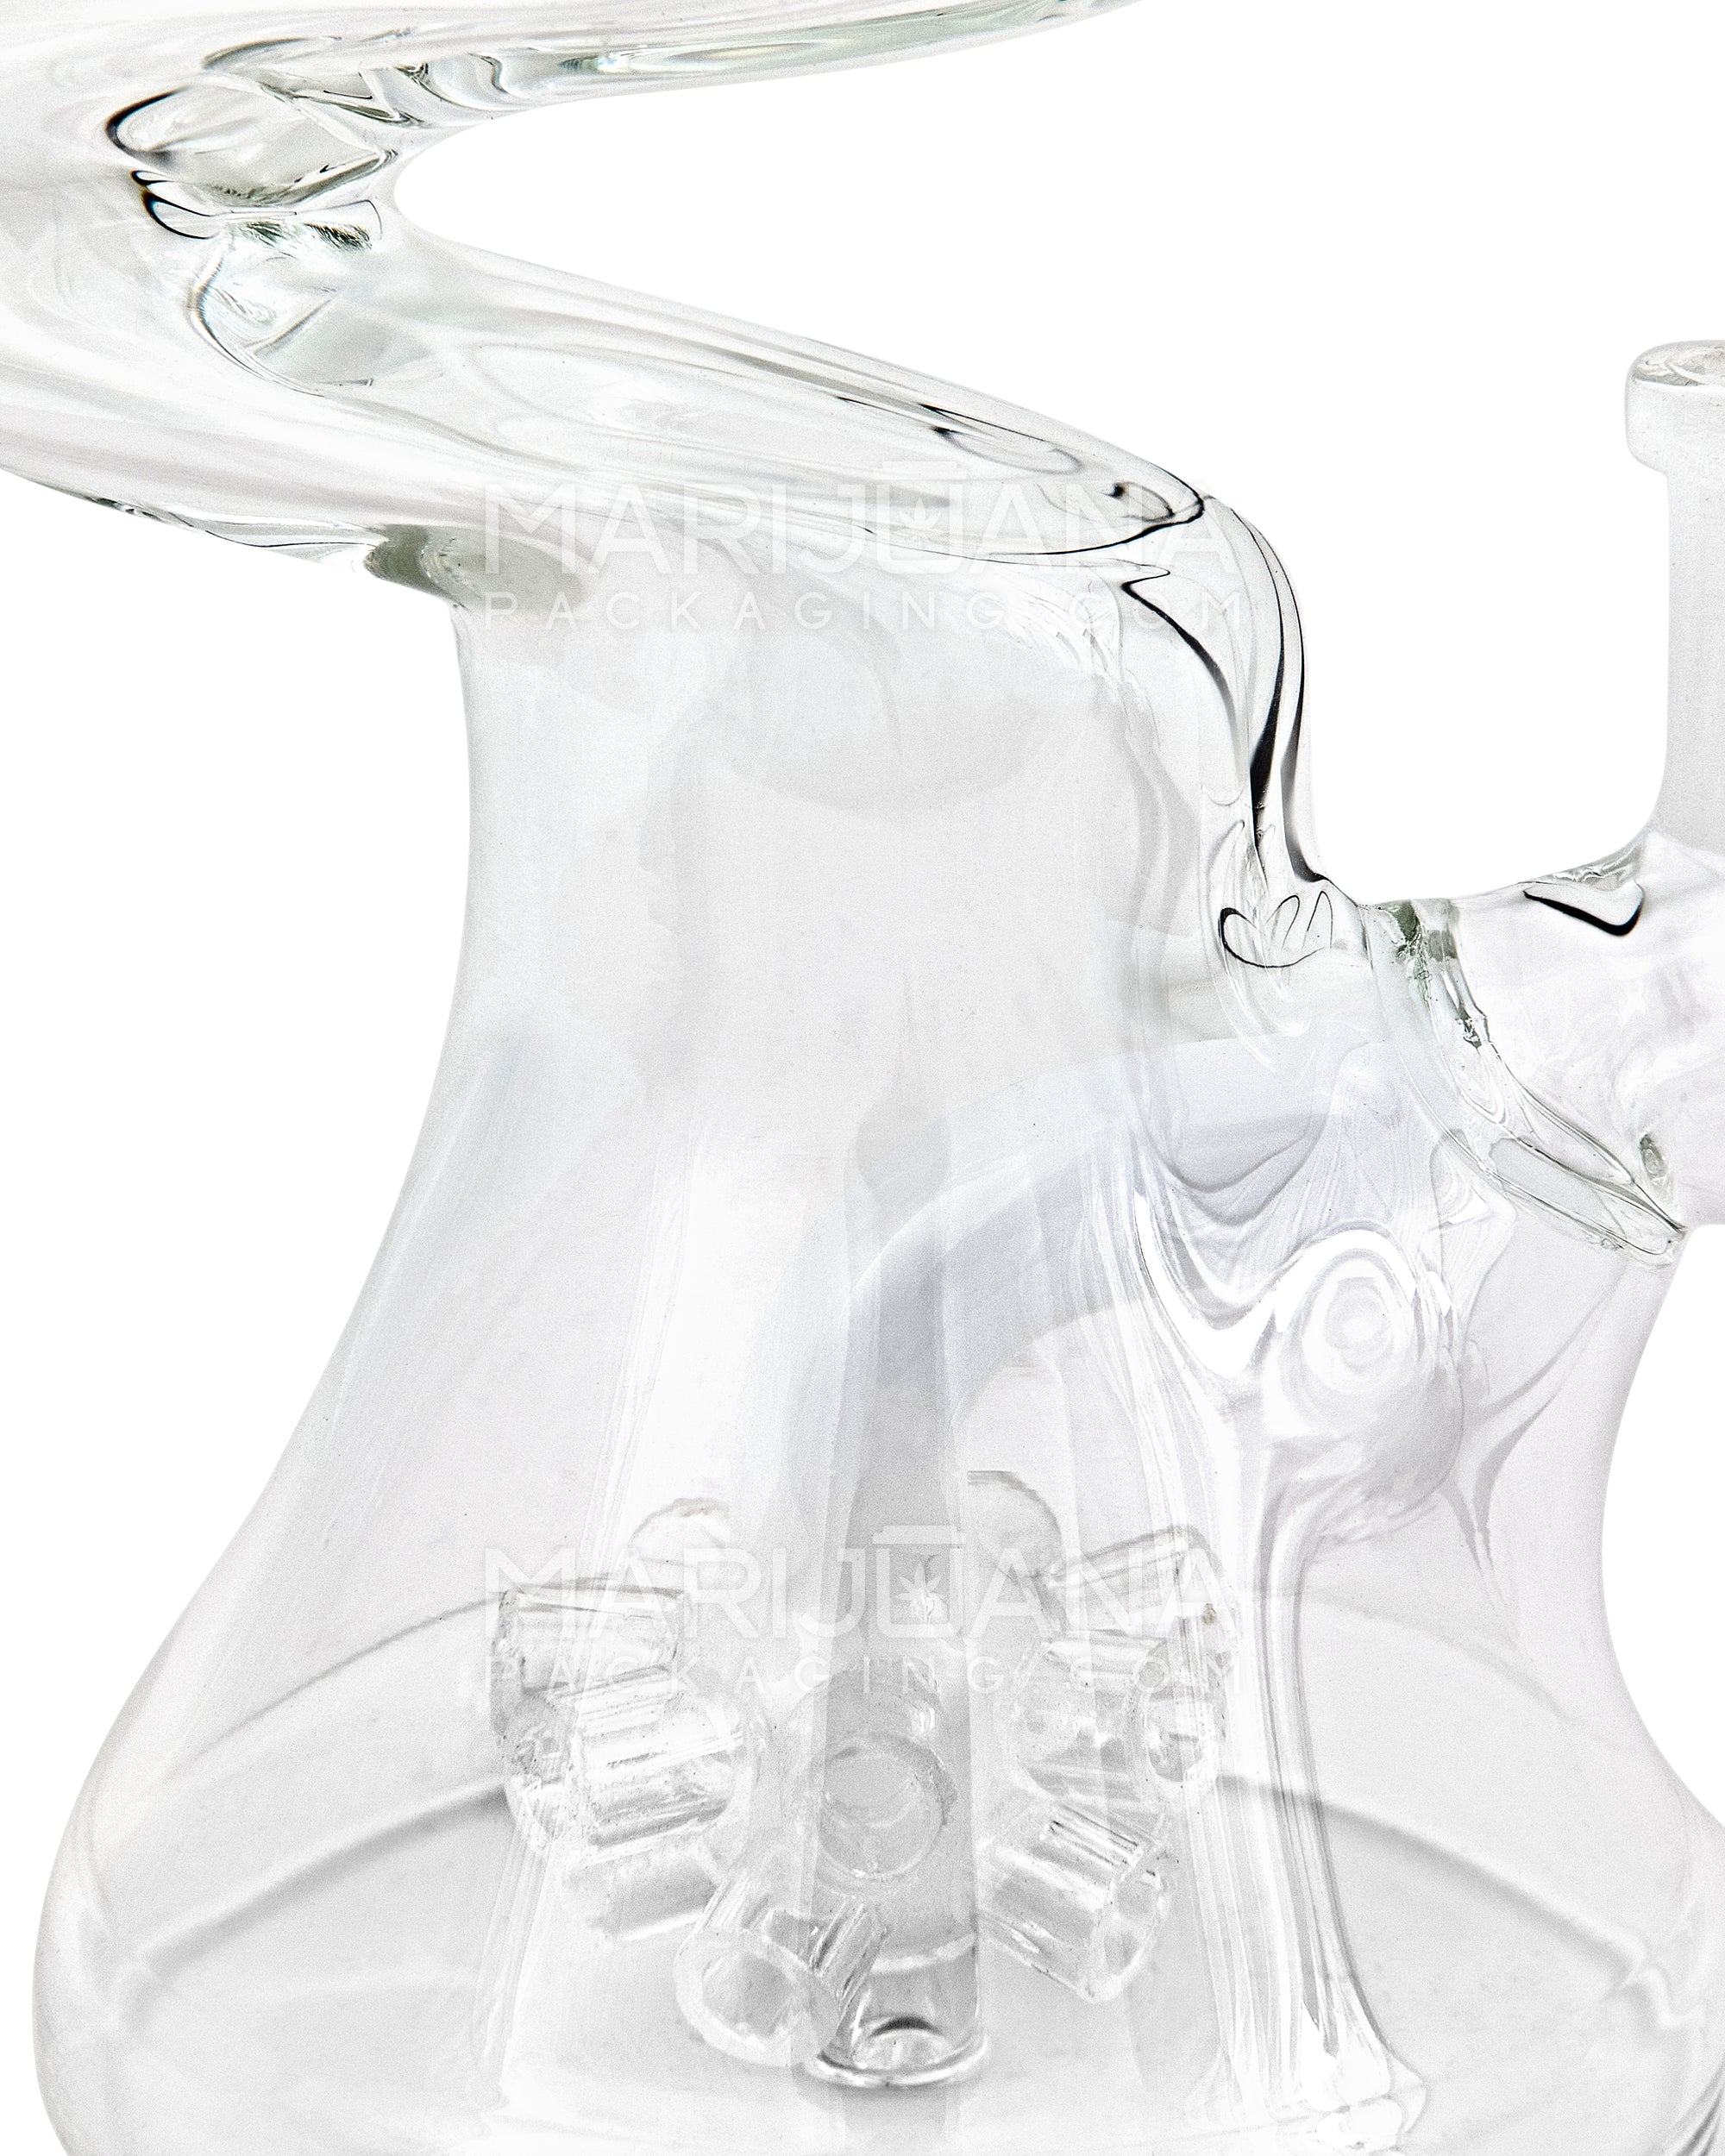 Z-Neck Atomic Perc Glass Beaker Water Pipe | 7in Tall - 14mm Bowl - White - 5